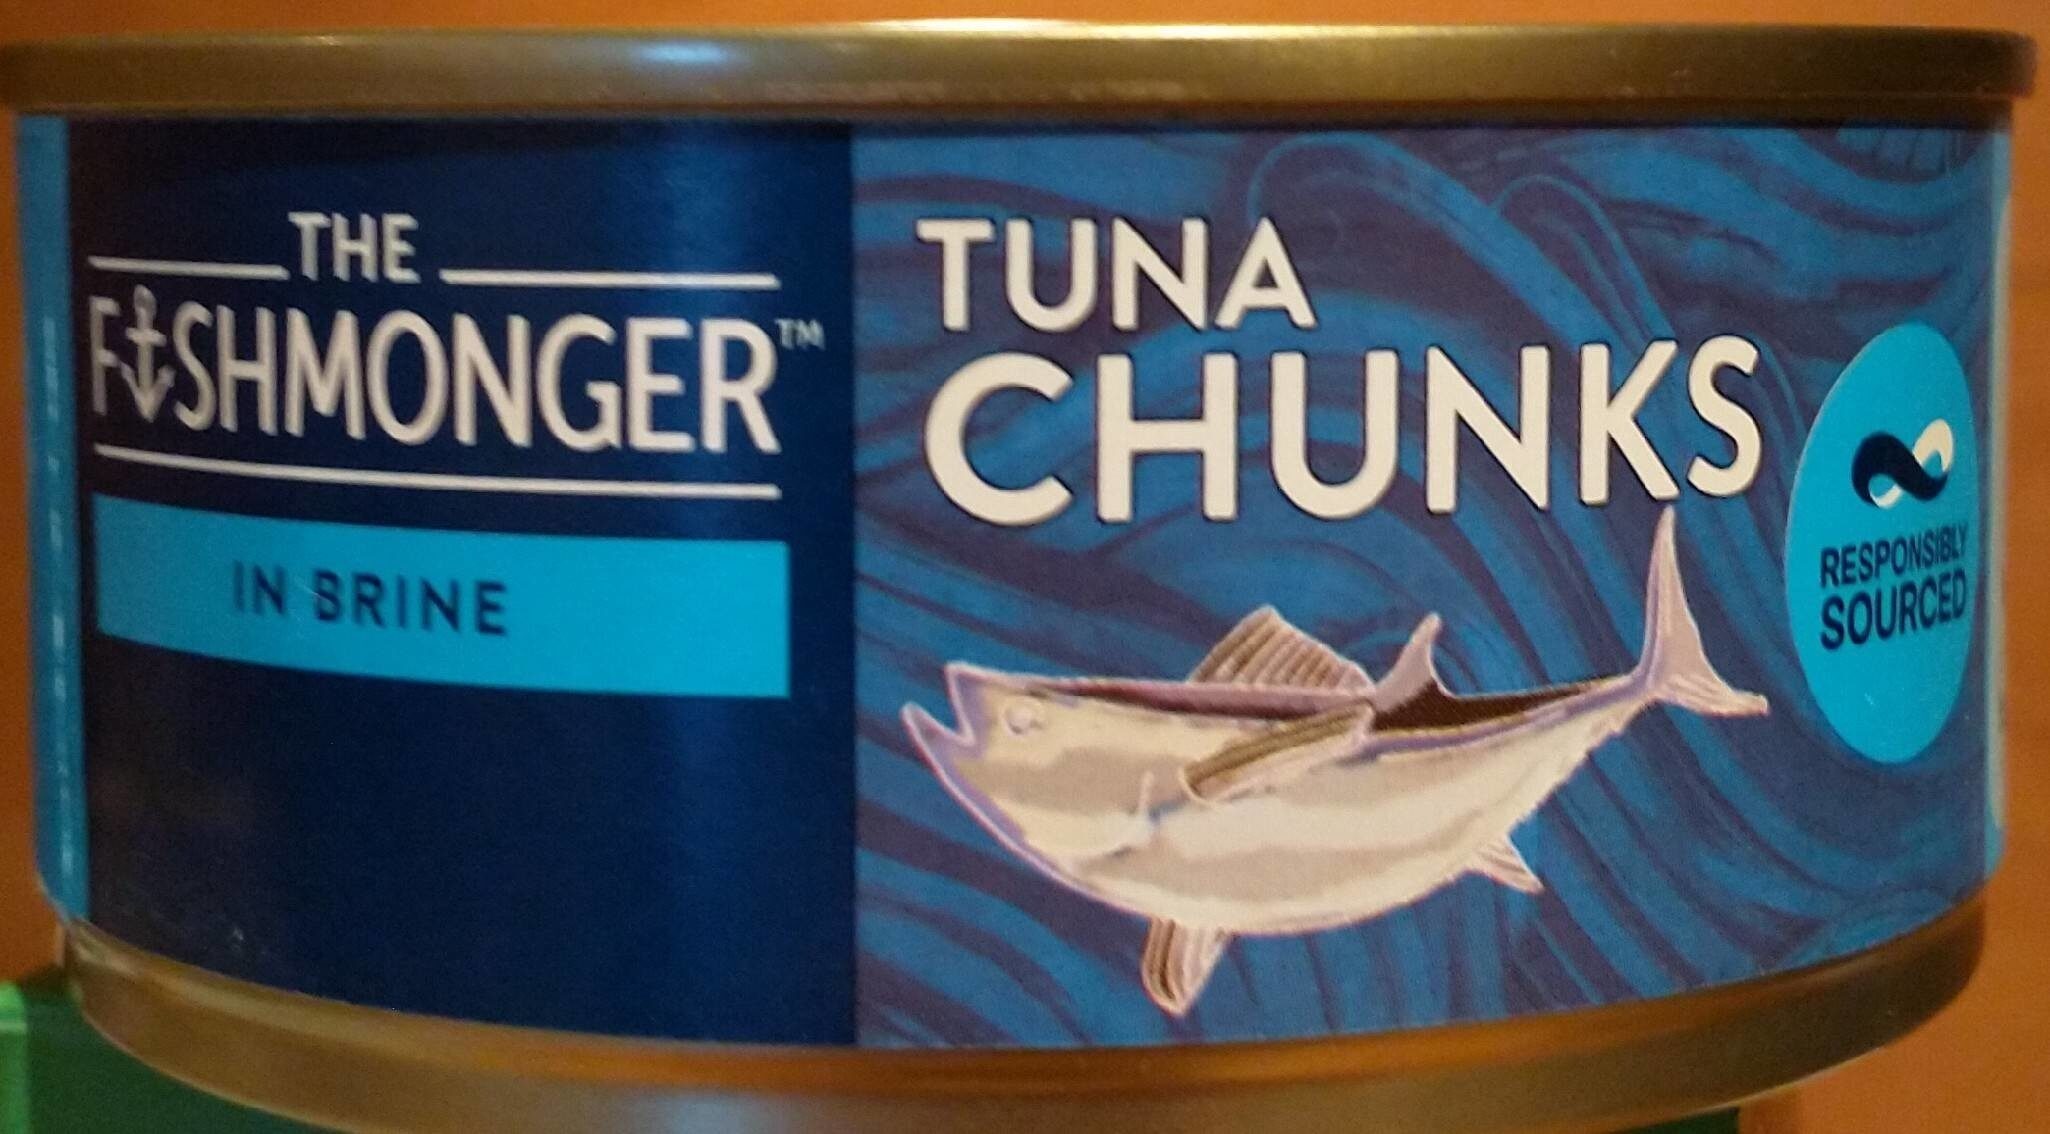 Tuna chunks in brine - Product